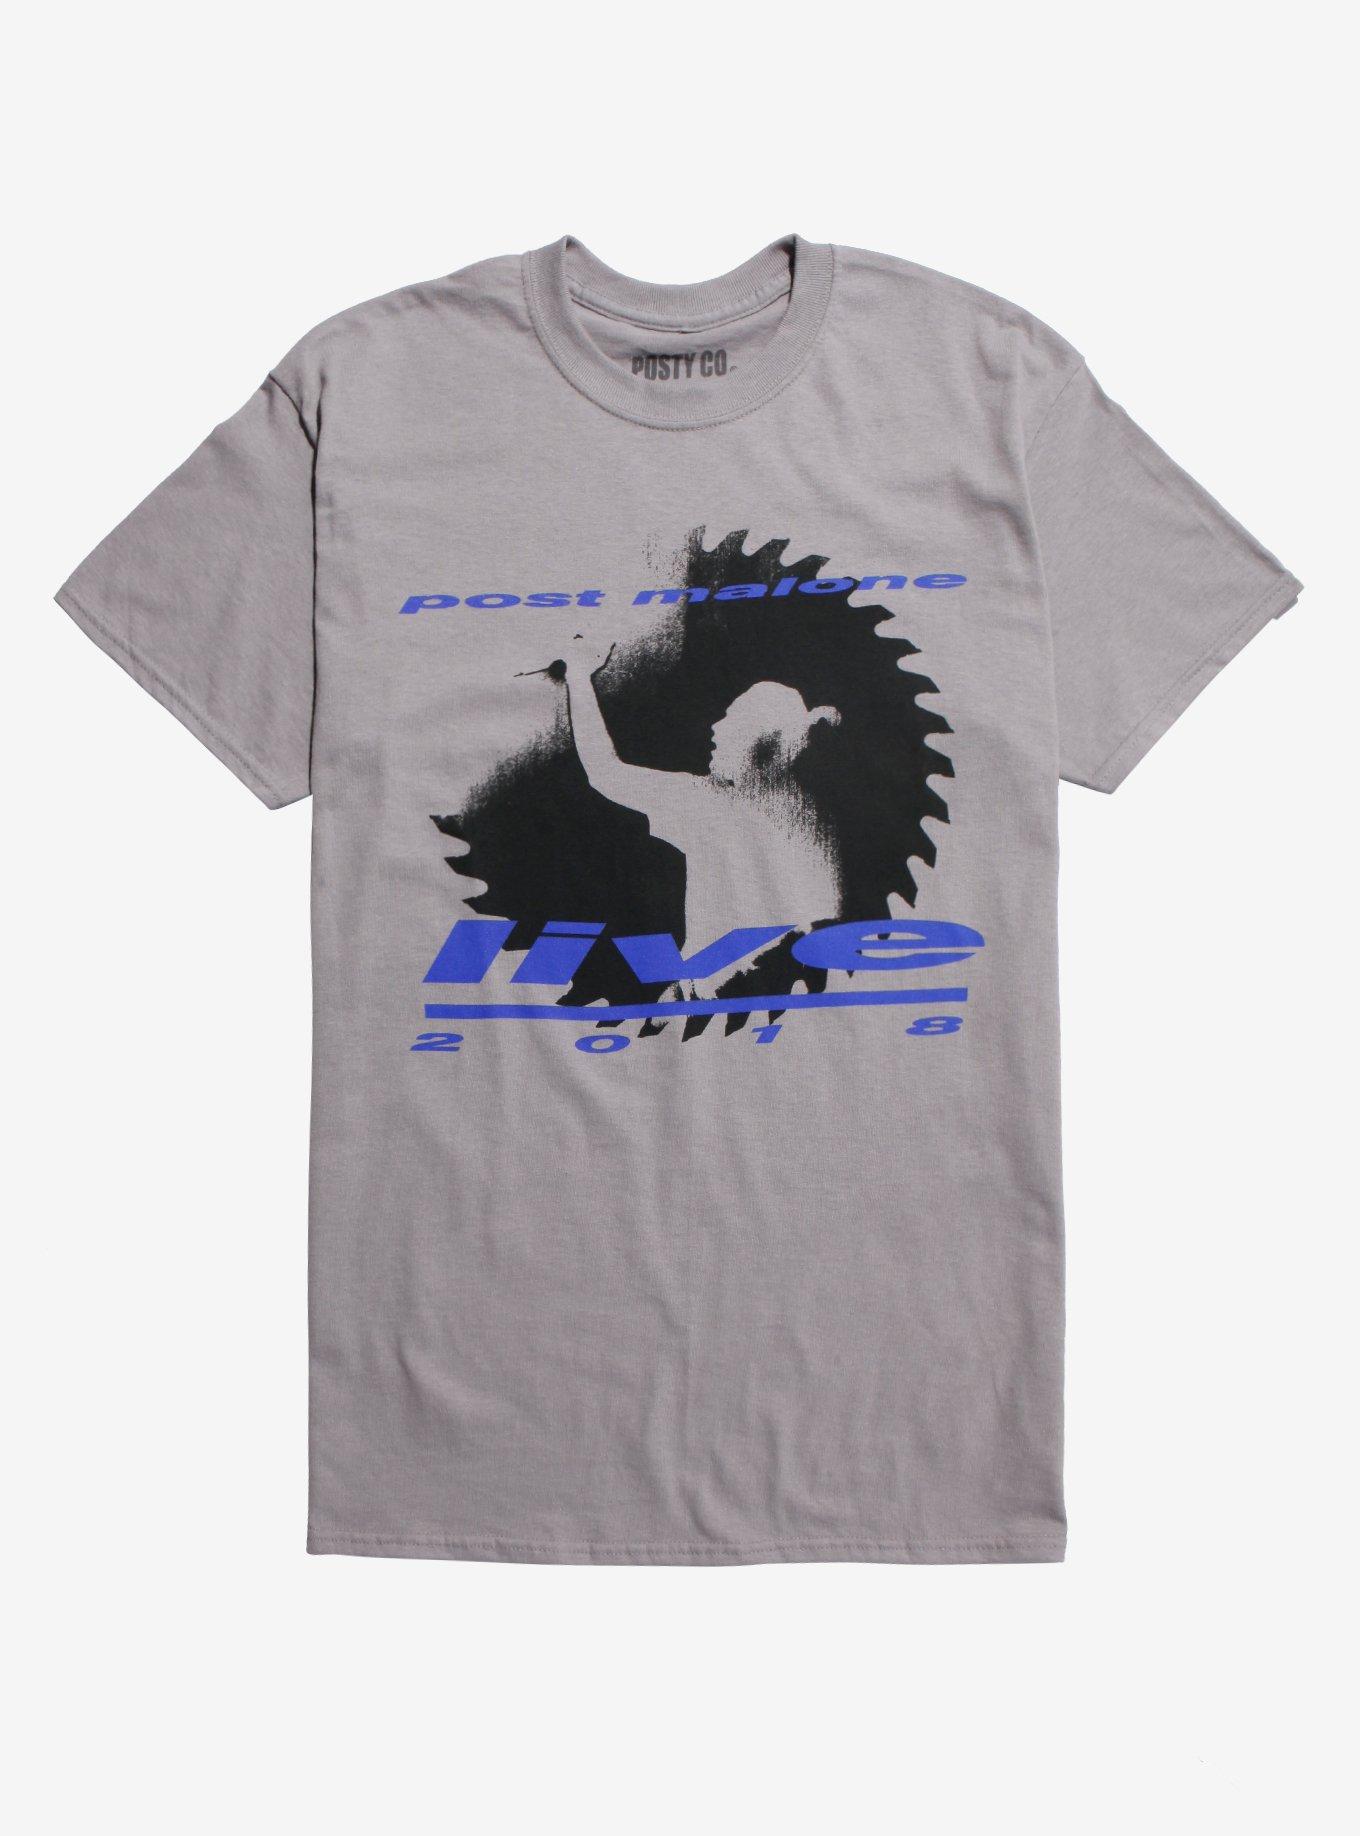 Post Malone Saw Blade Live 2018 T-Shirt, GREY, hi-res